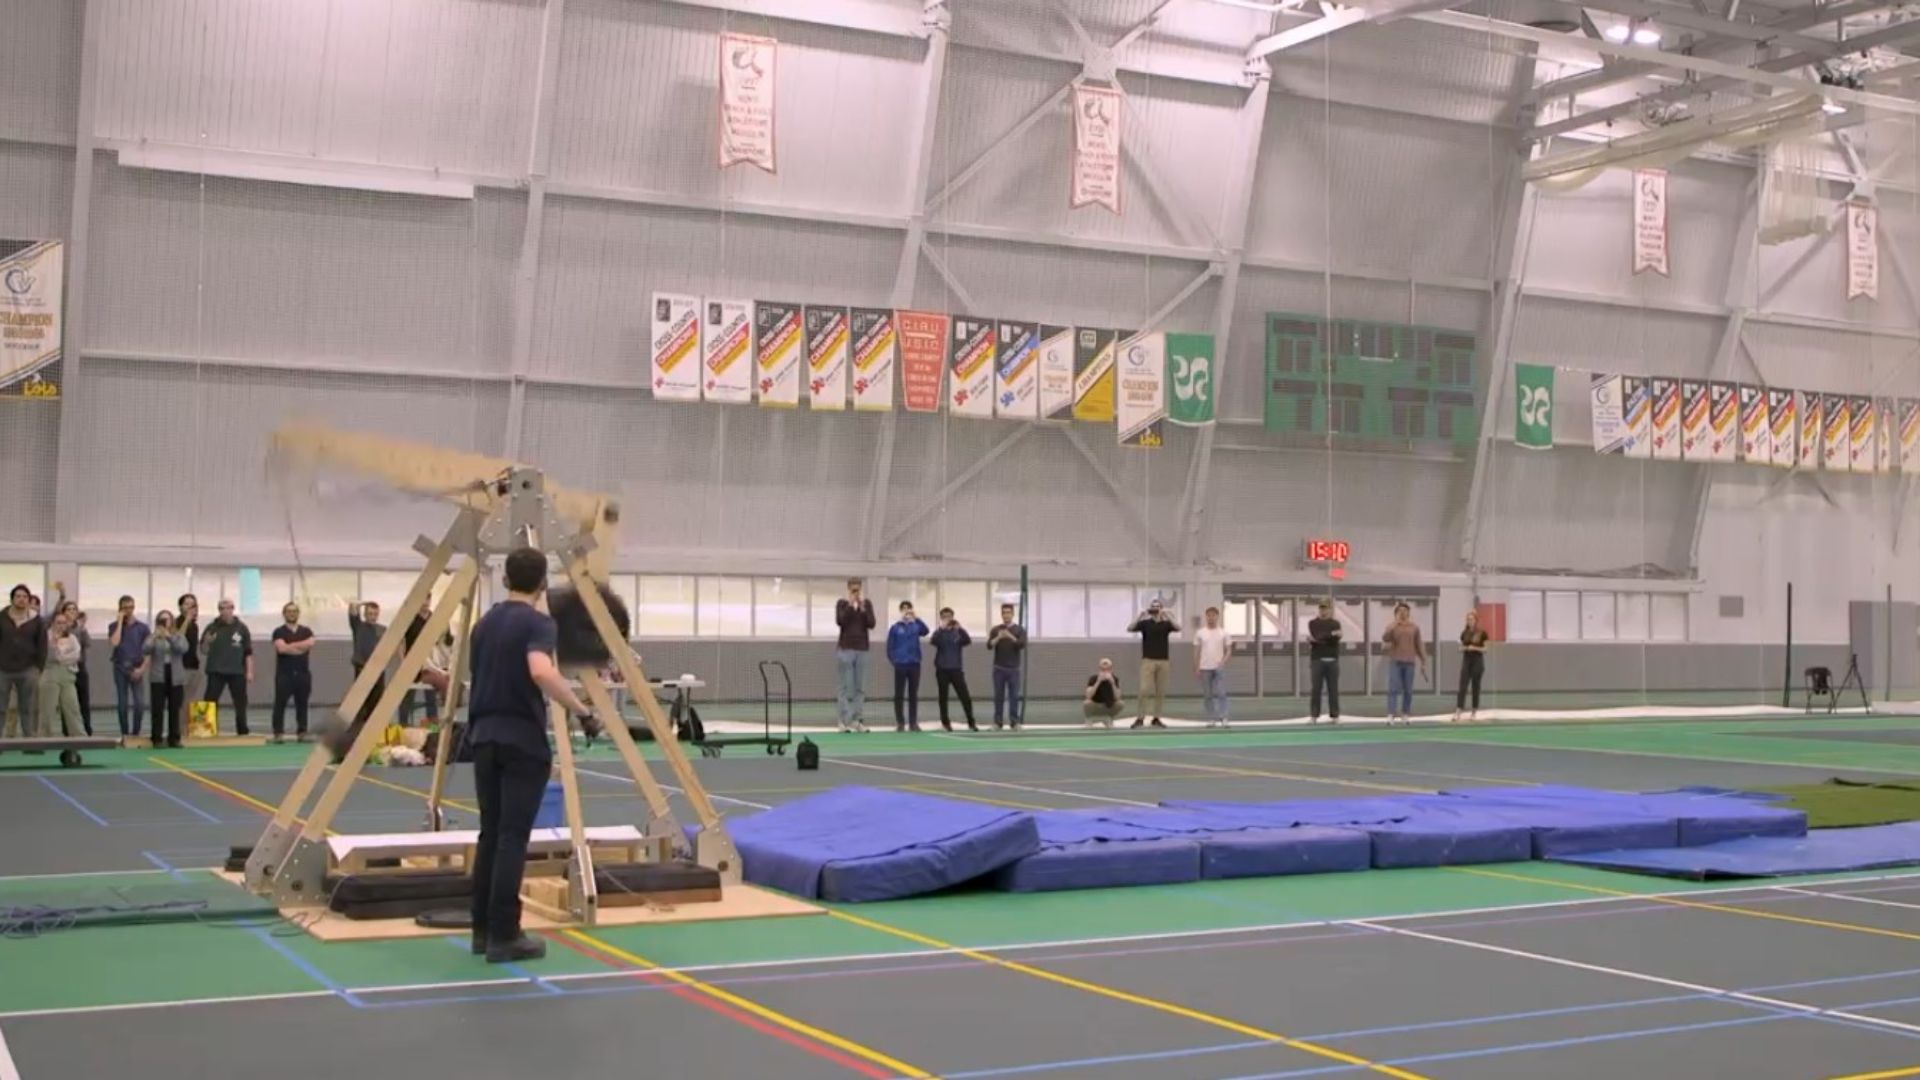 NASA inspired catapults at the University of Sherbrooke